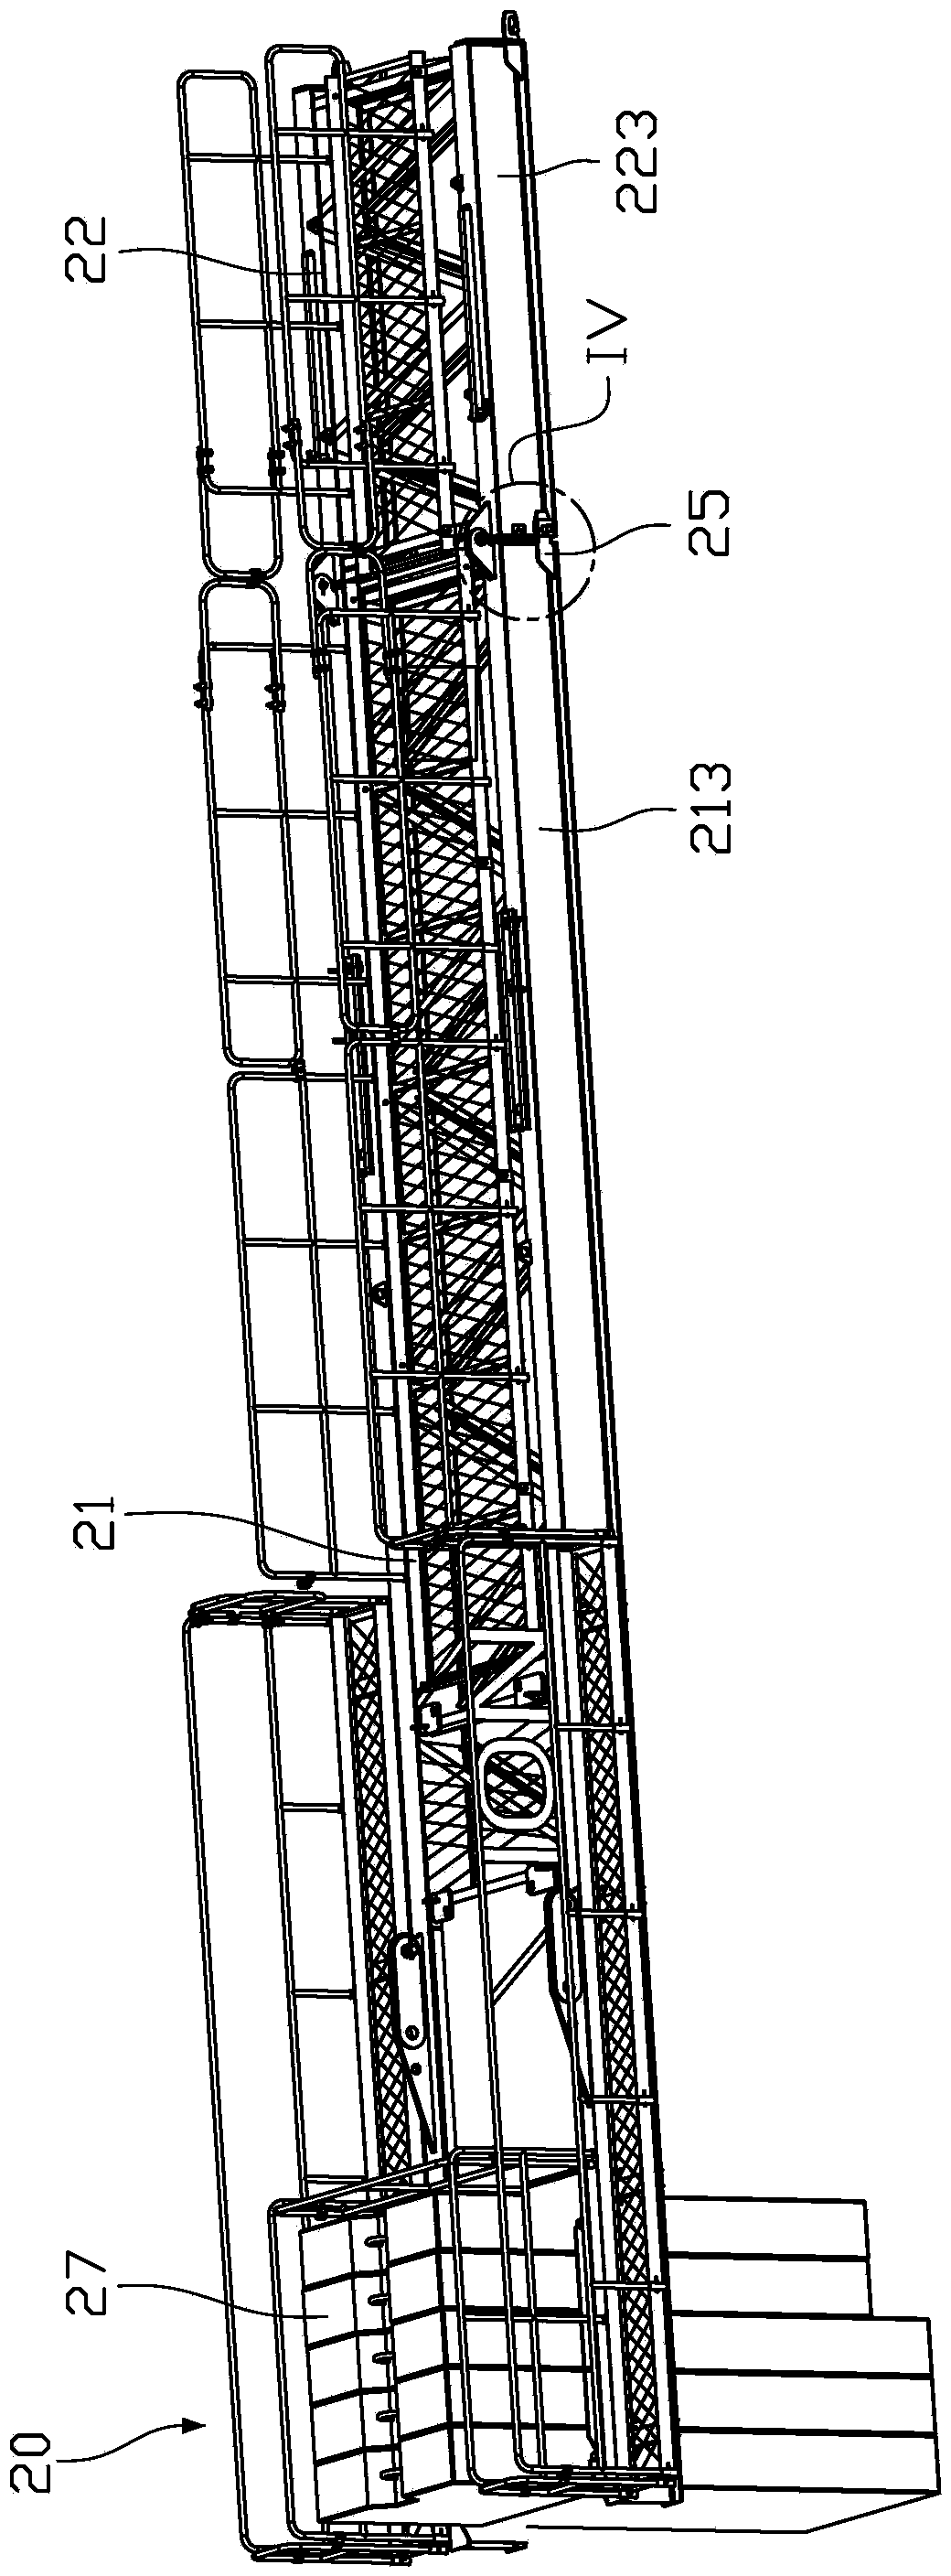 Segmented balance arm and tower crane